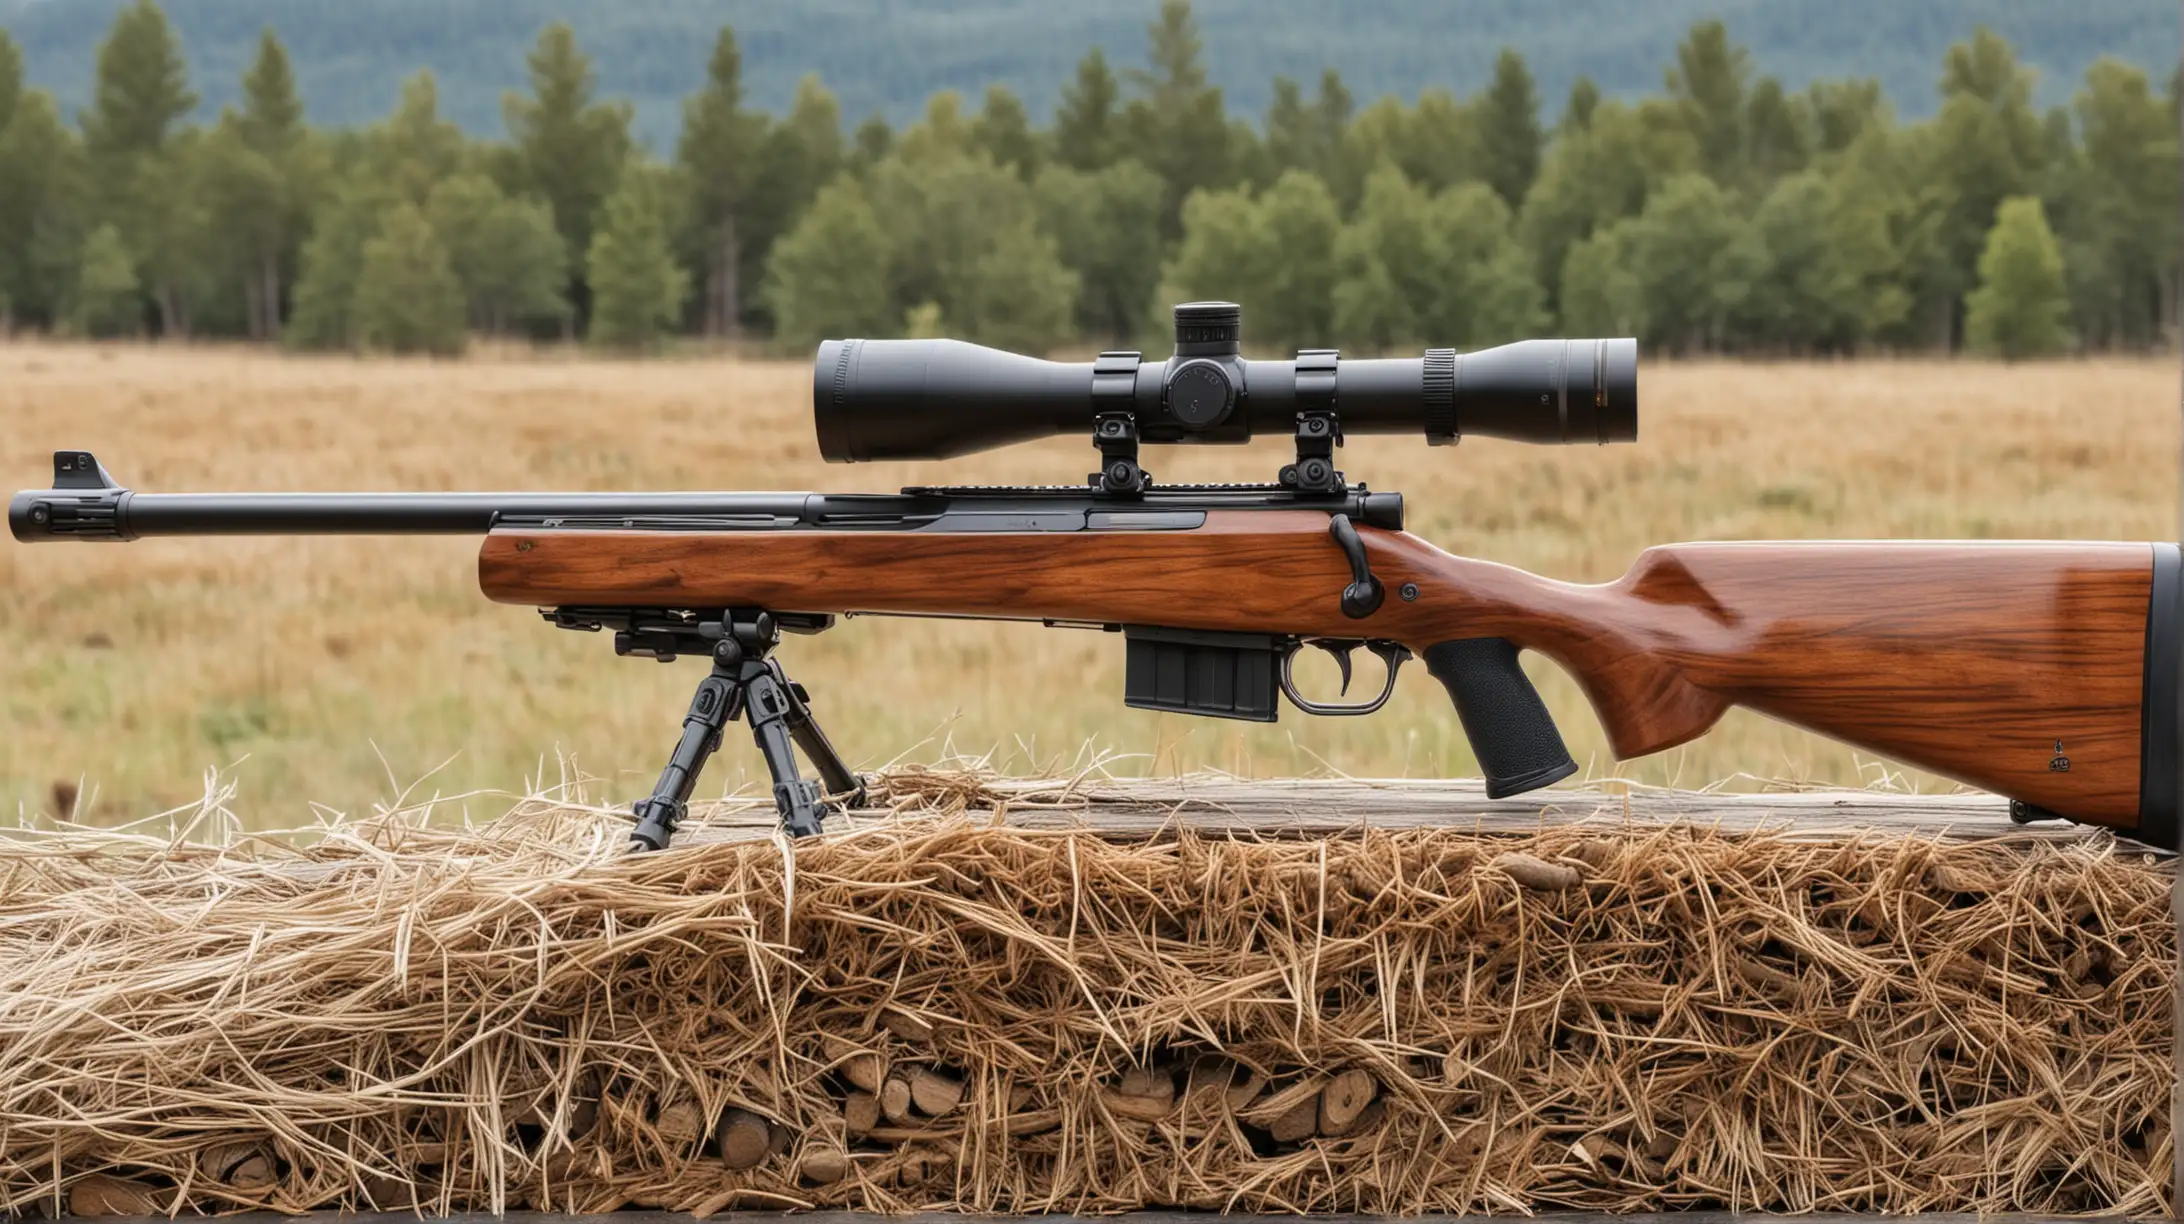 long range rifle on log, hay blurry background